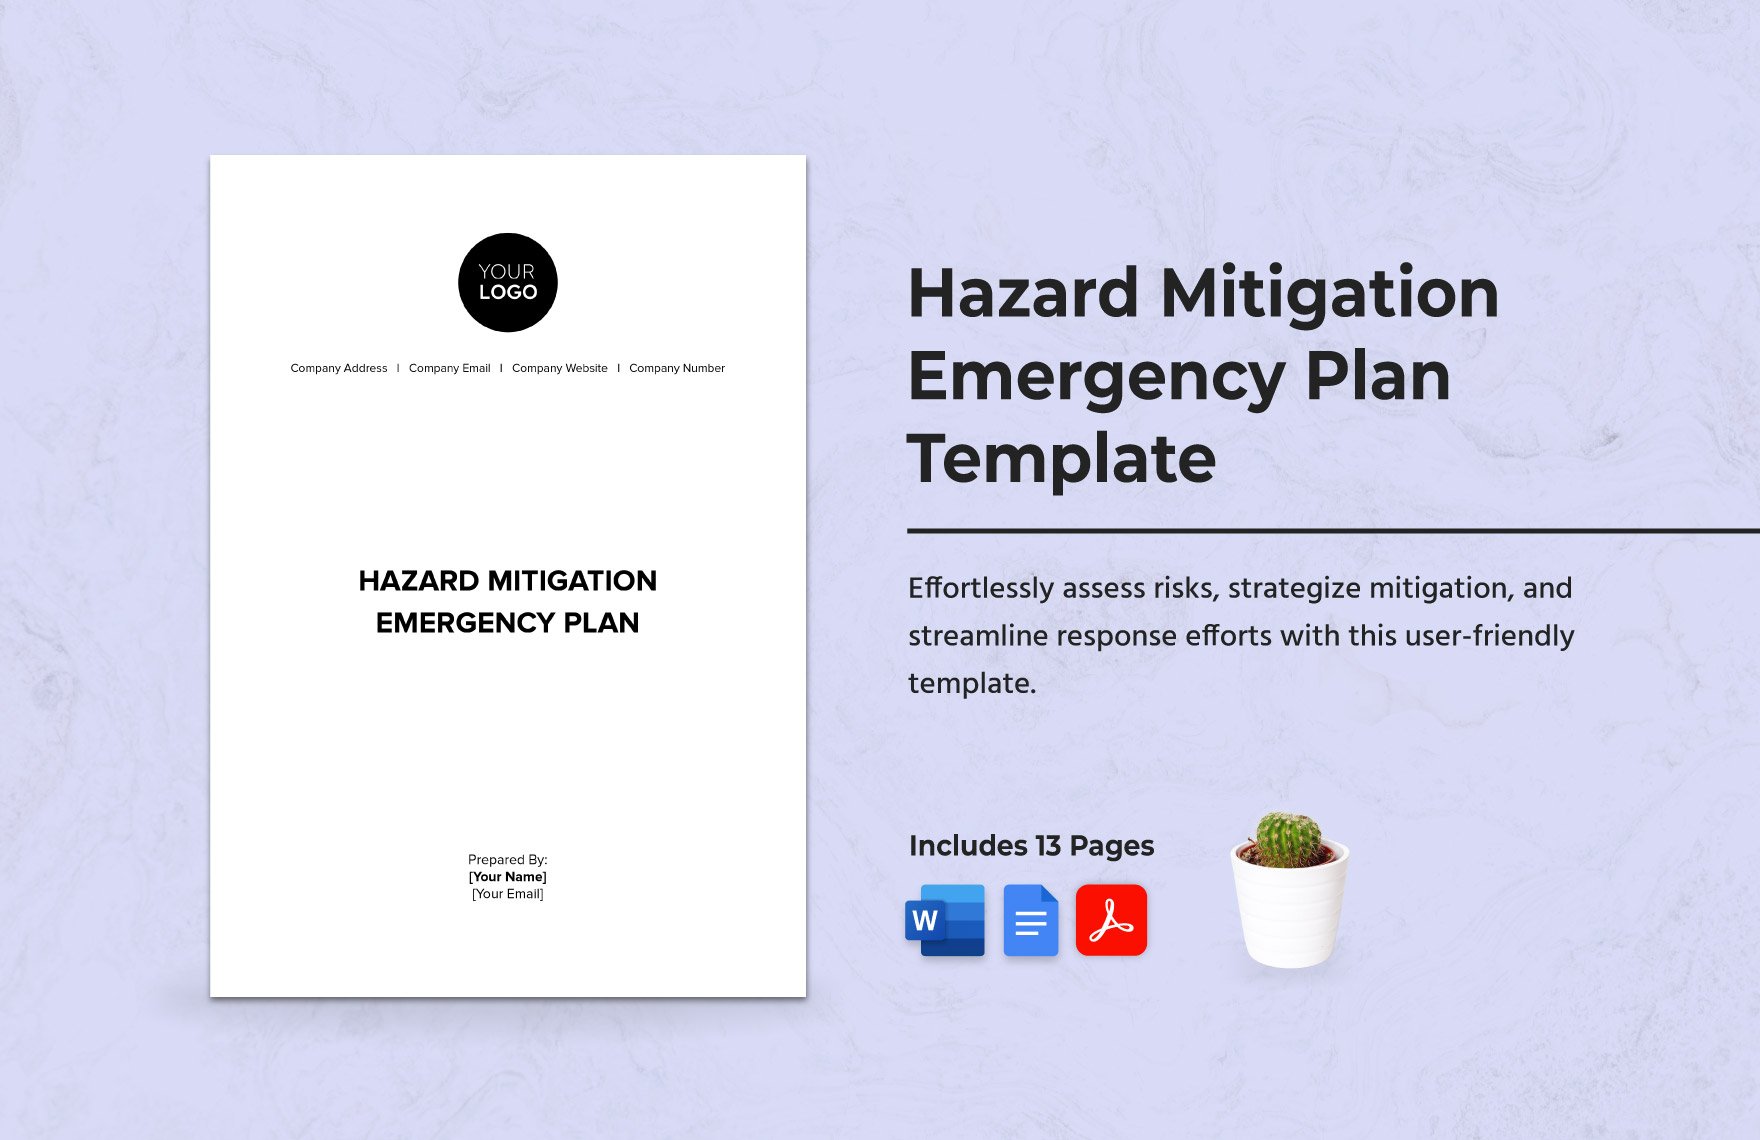 Hazard Mitigation Emergency Plan Template in Word, Google Docs, PDF